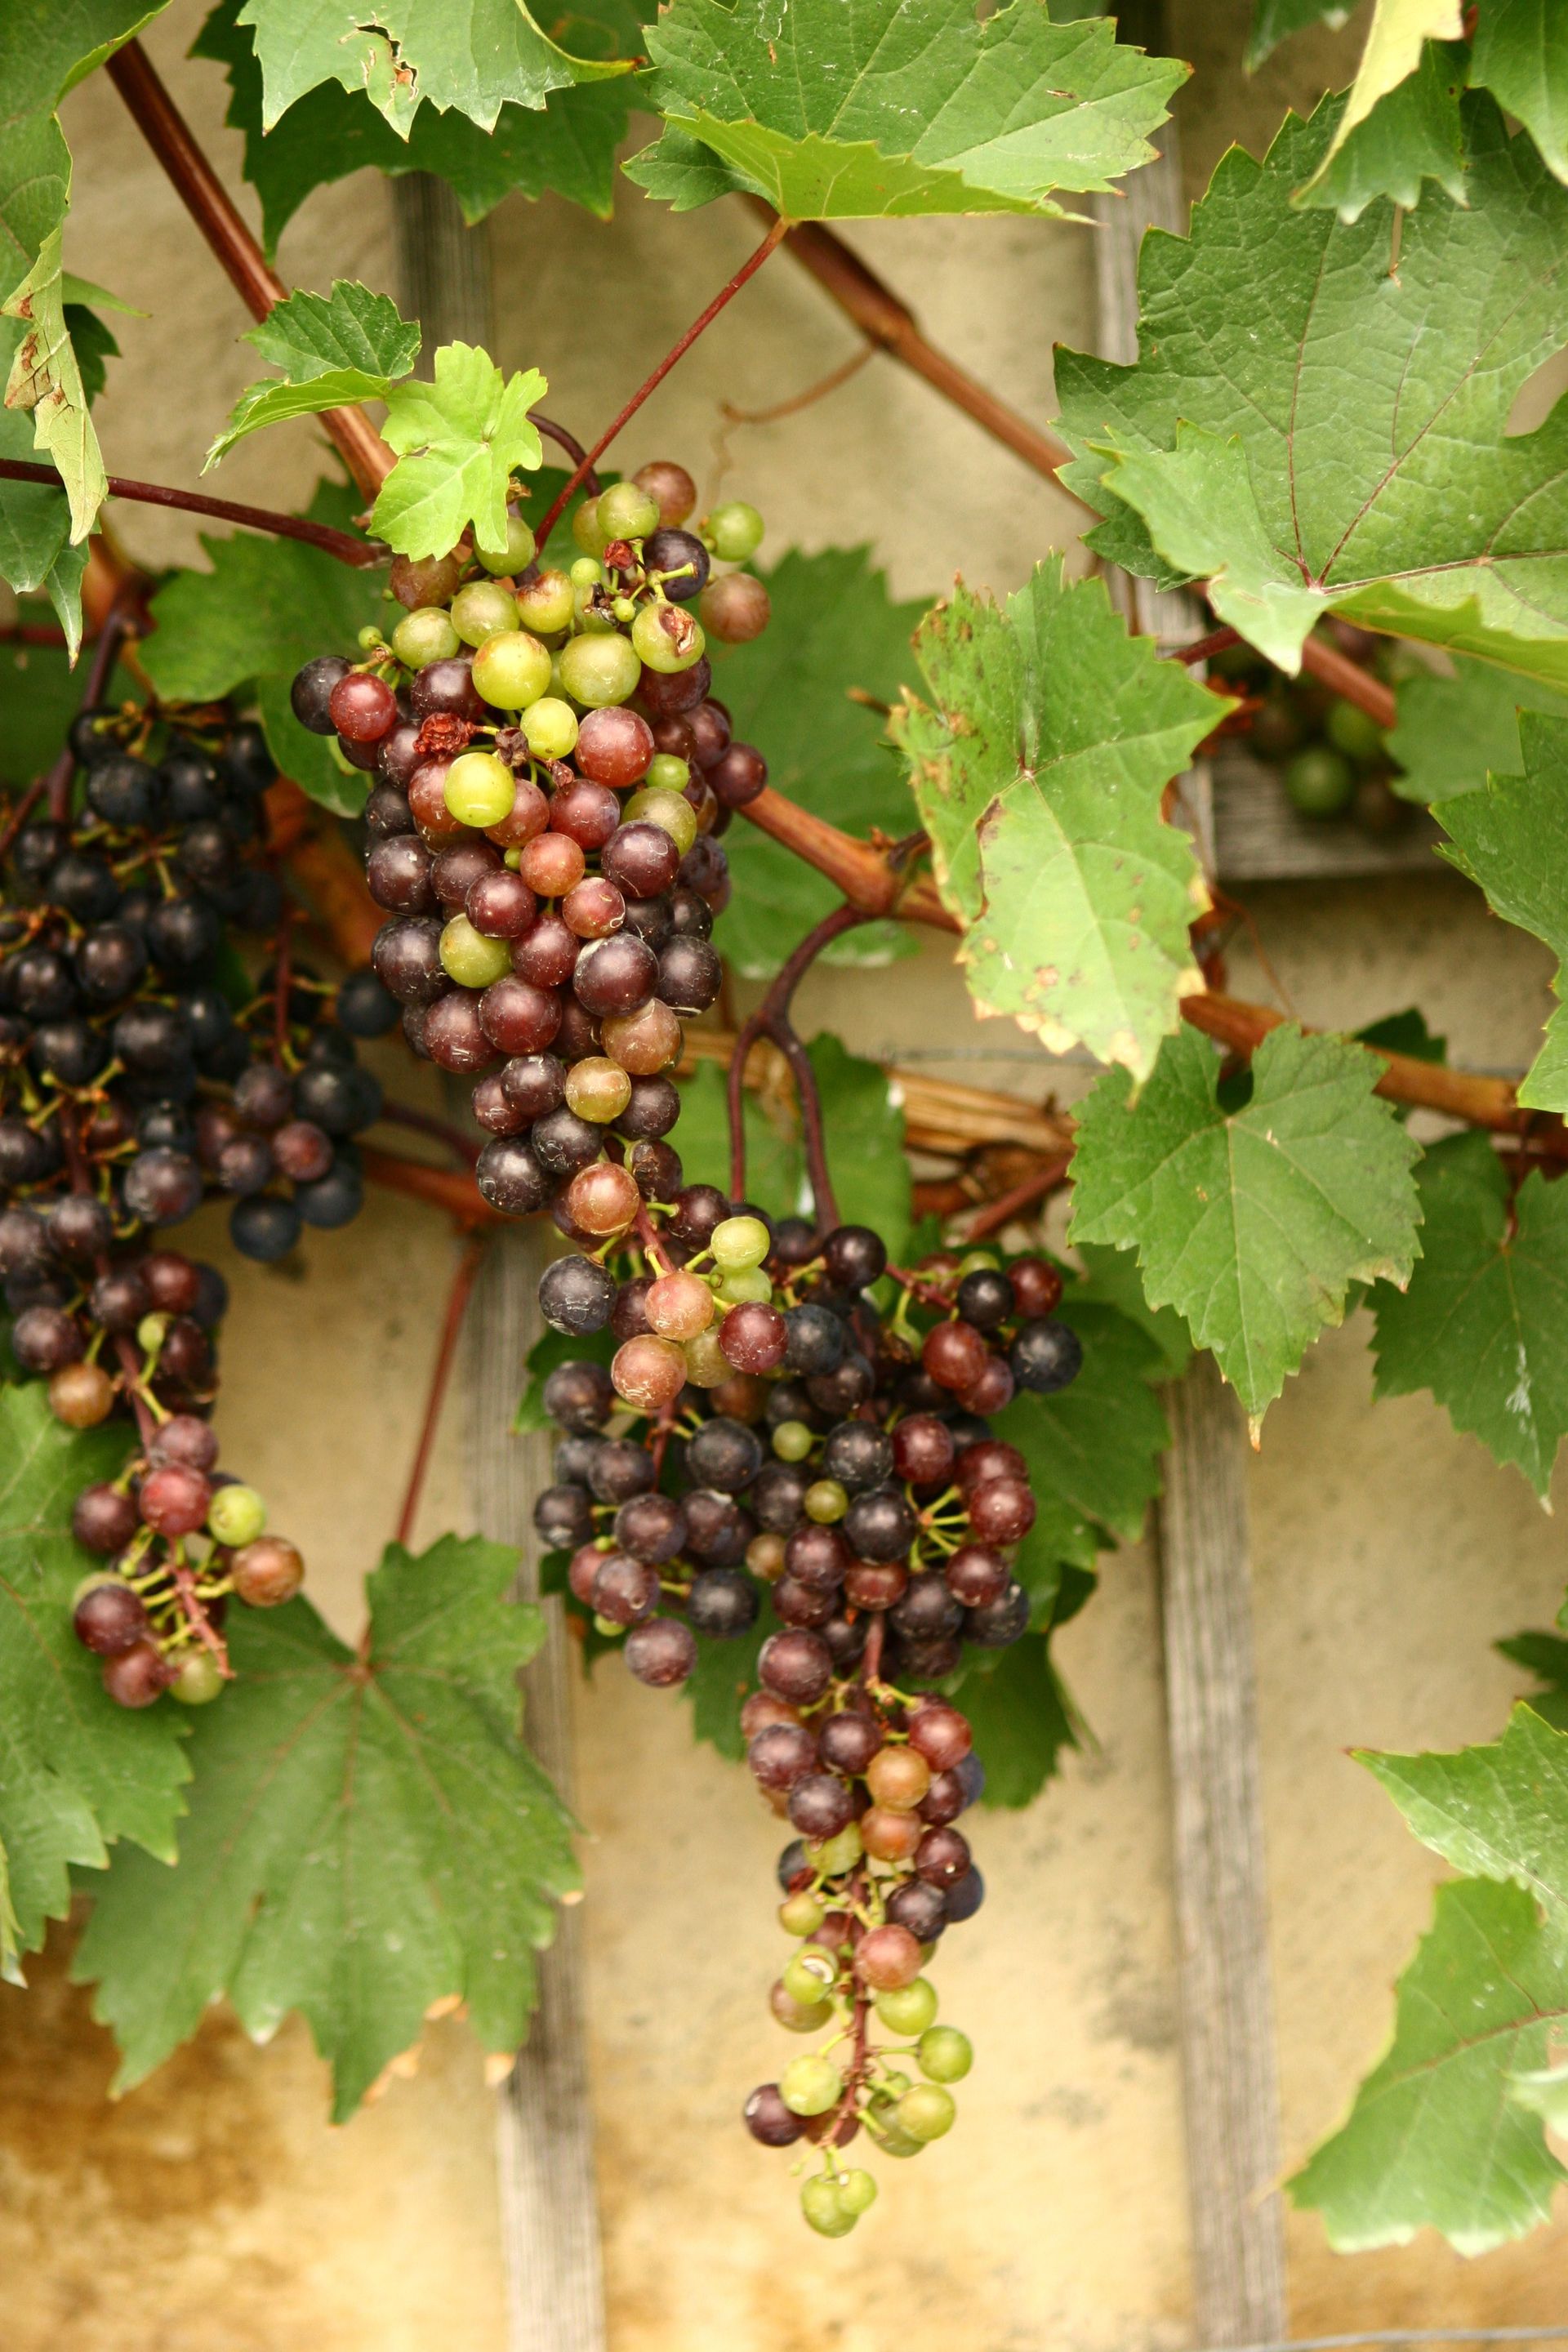 Grapes on a vine.